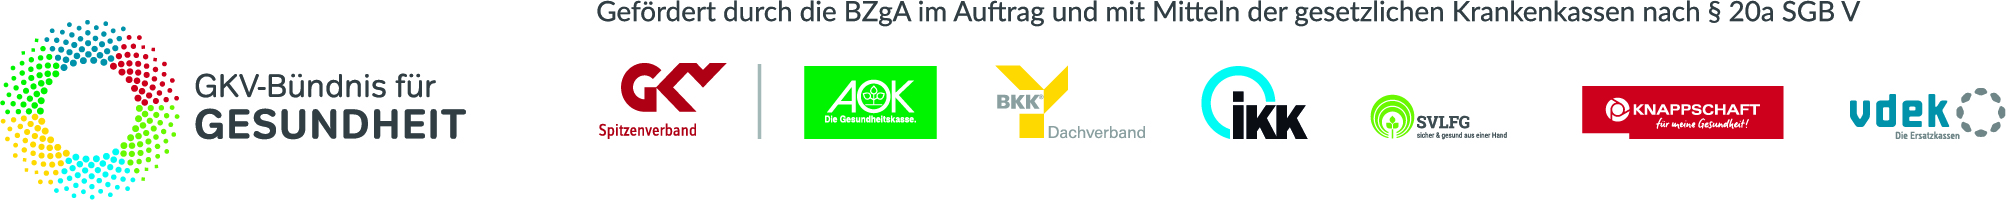 GKV Bündnis für Gesundheit - Logos